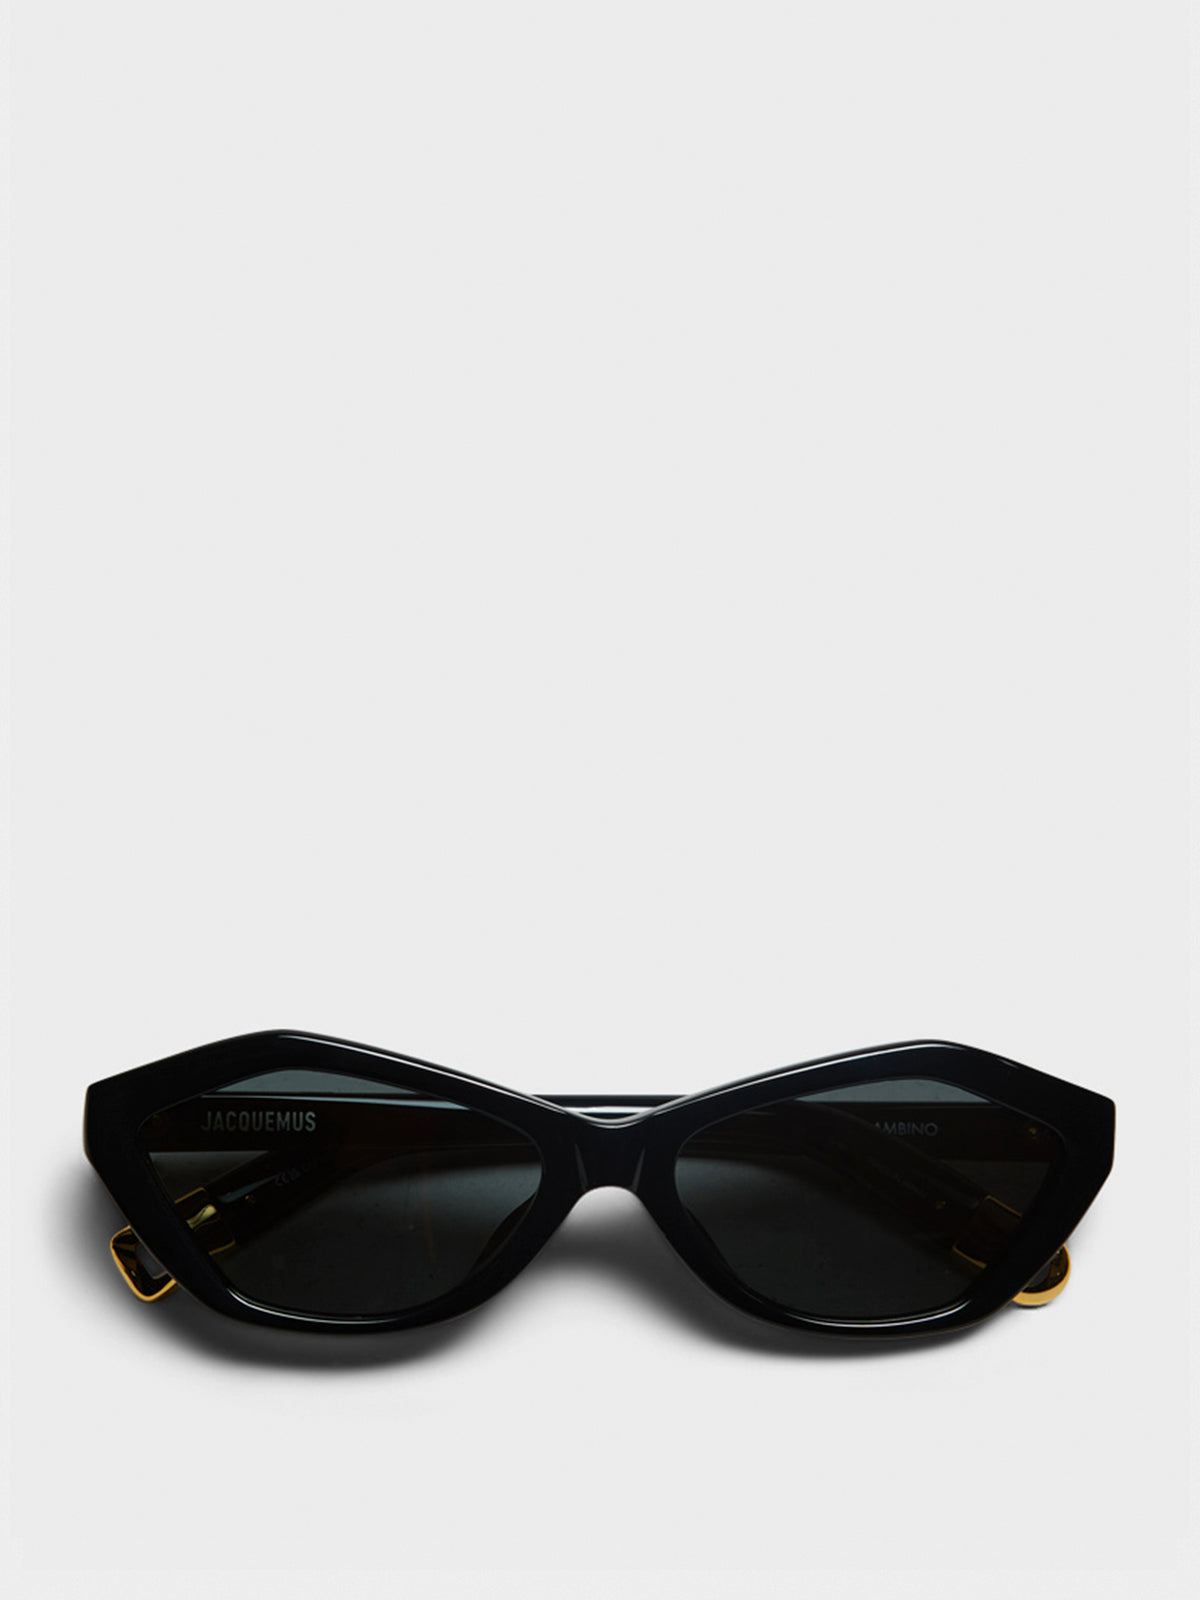 Bambino Sunglasses in Black, Yellow Gold and Grey